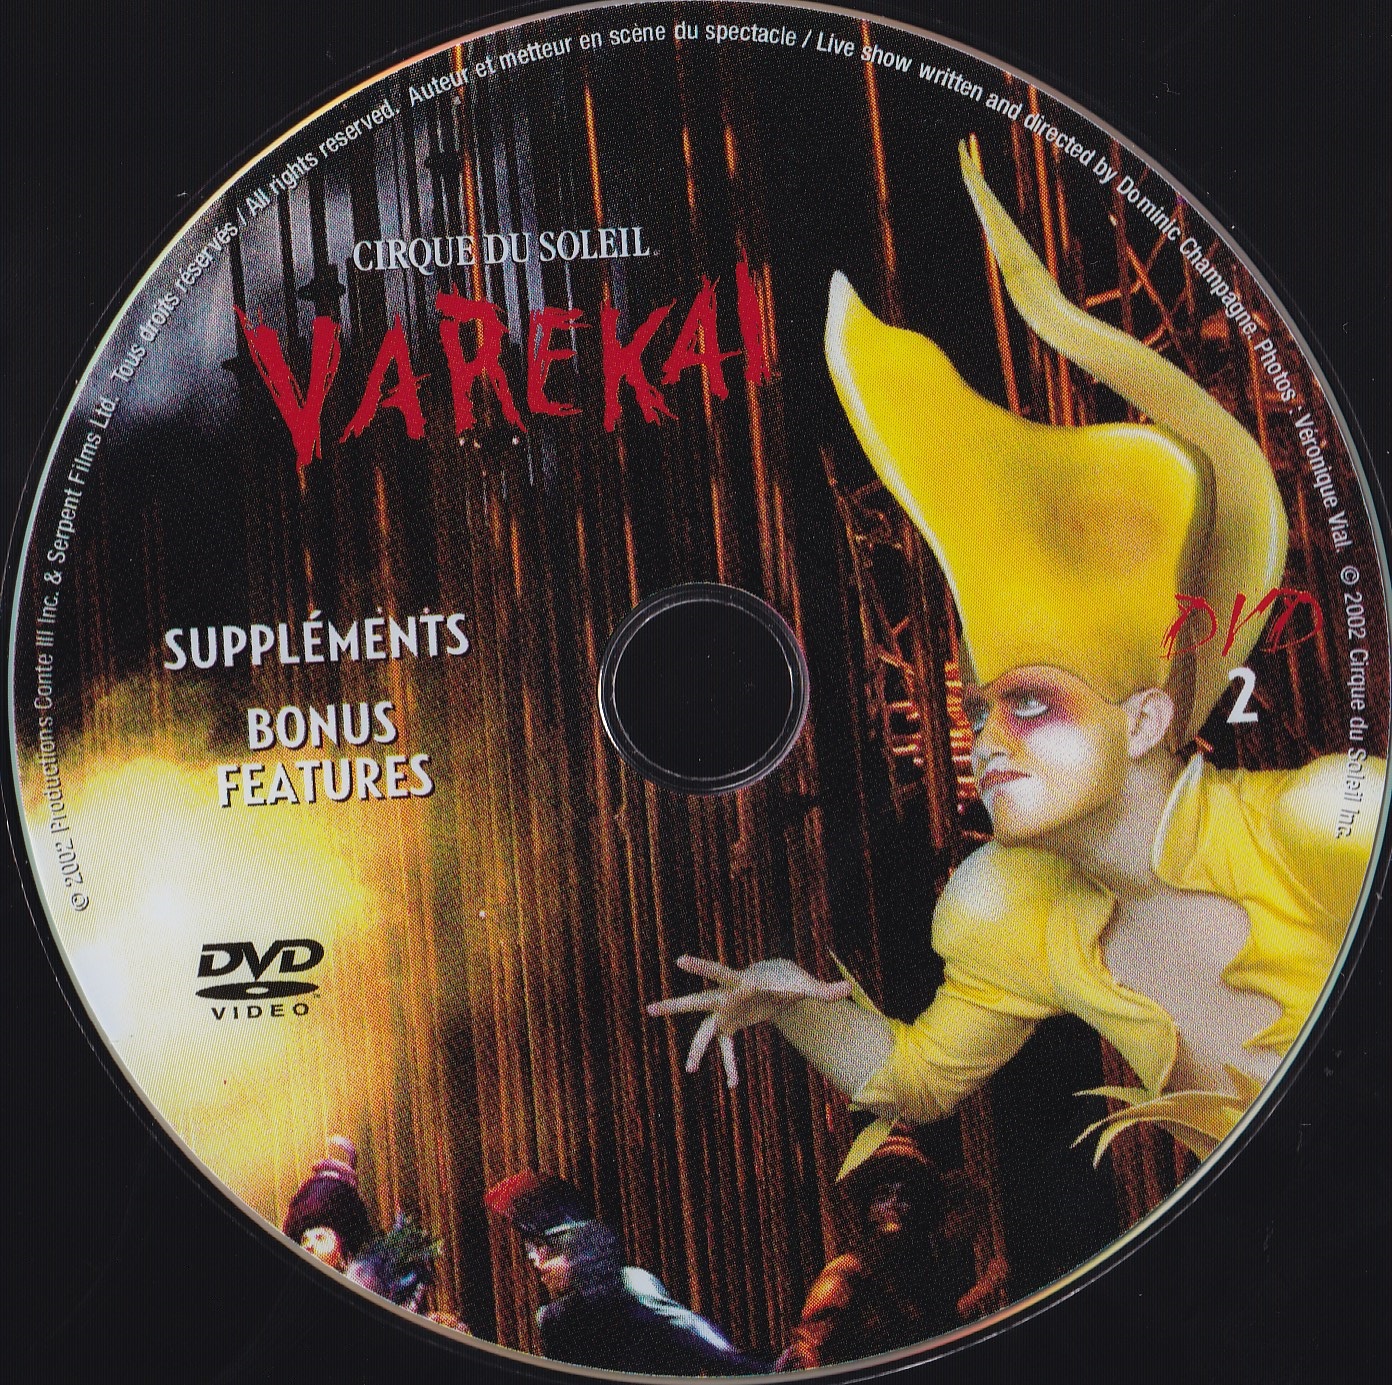 Le Cirque du Soleil - Varekai DISC 2